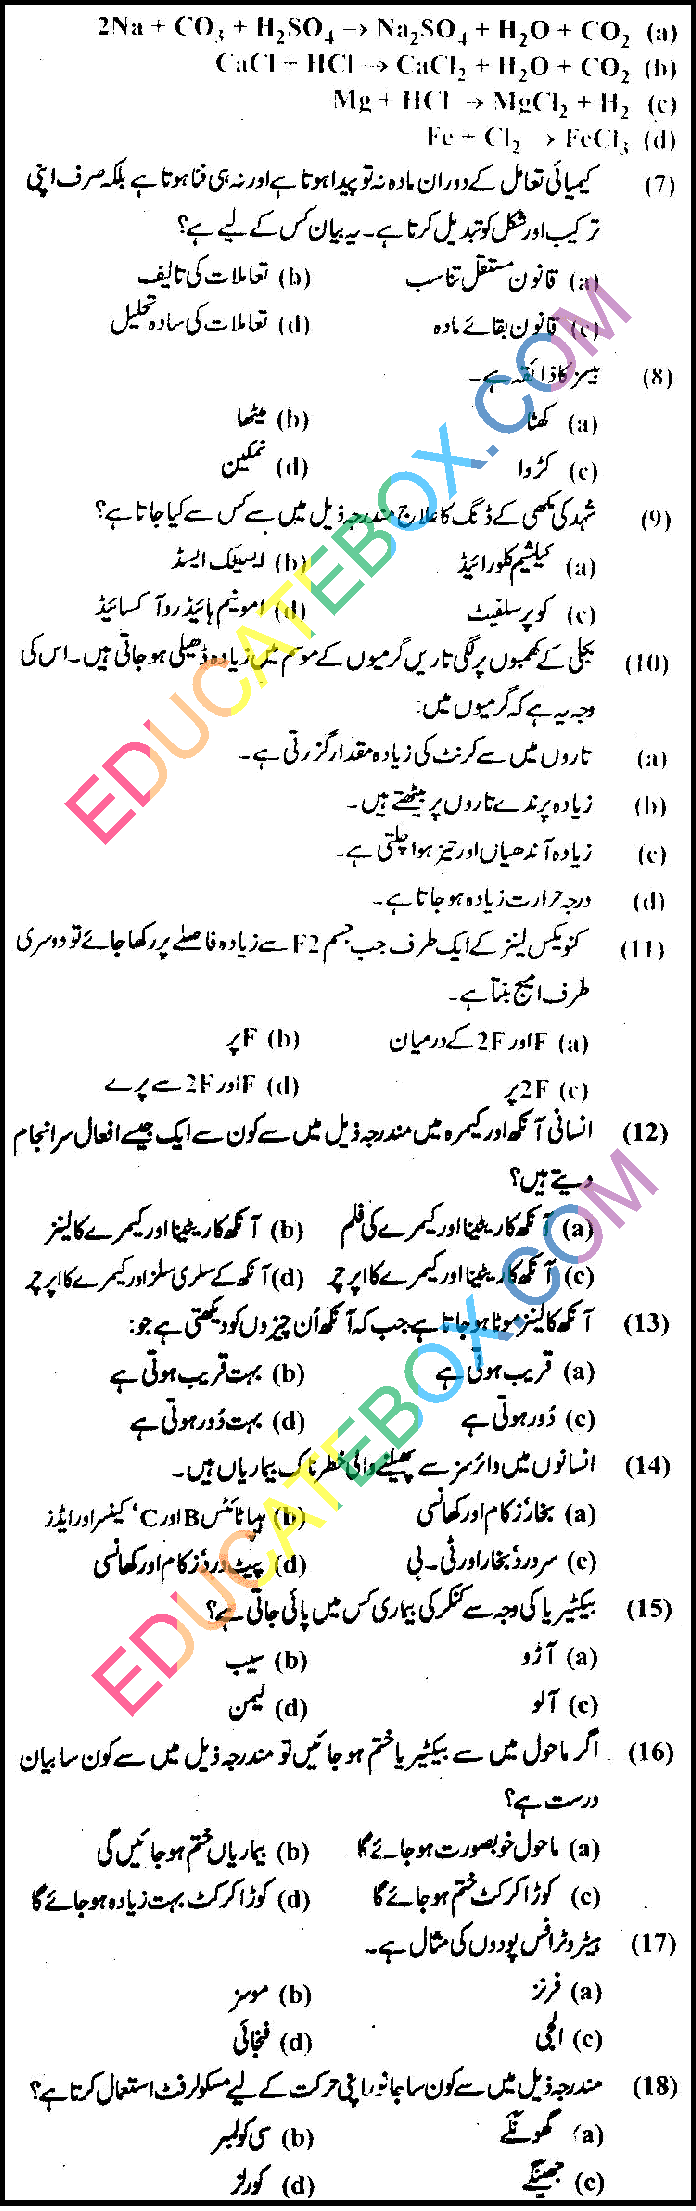 Past Paper 8th Class Science (Urdu Medium) Punjab Board (PEC) 2011 Objective Type Page 2 - پرچہ سائنس 2011 جماعت ہشتم پنجاب بورڈ اردو میڈیم